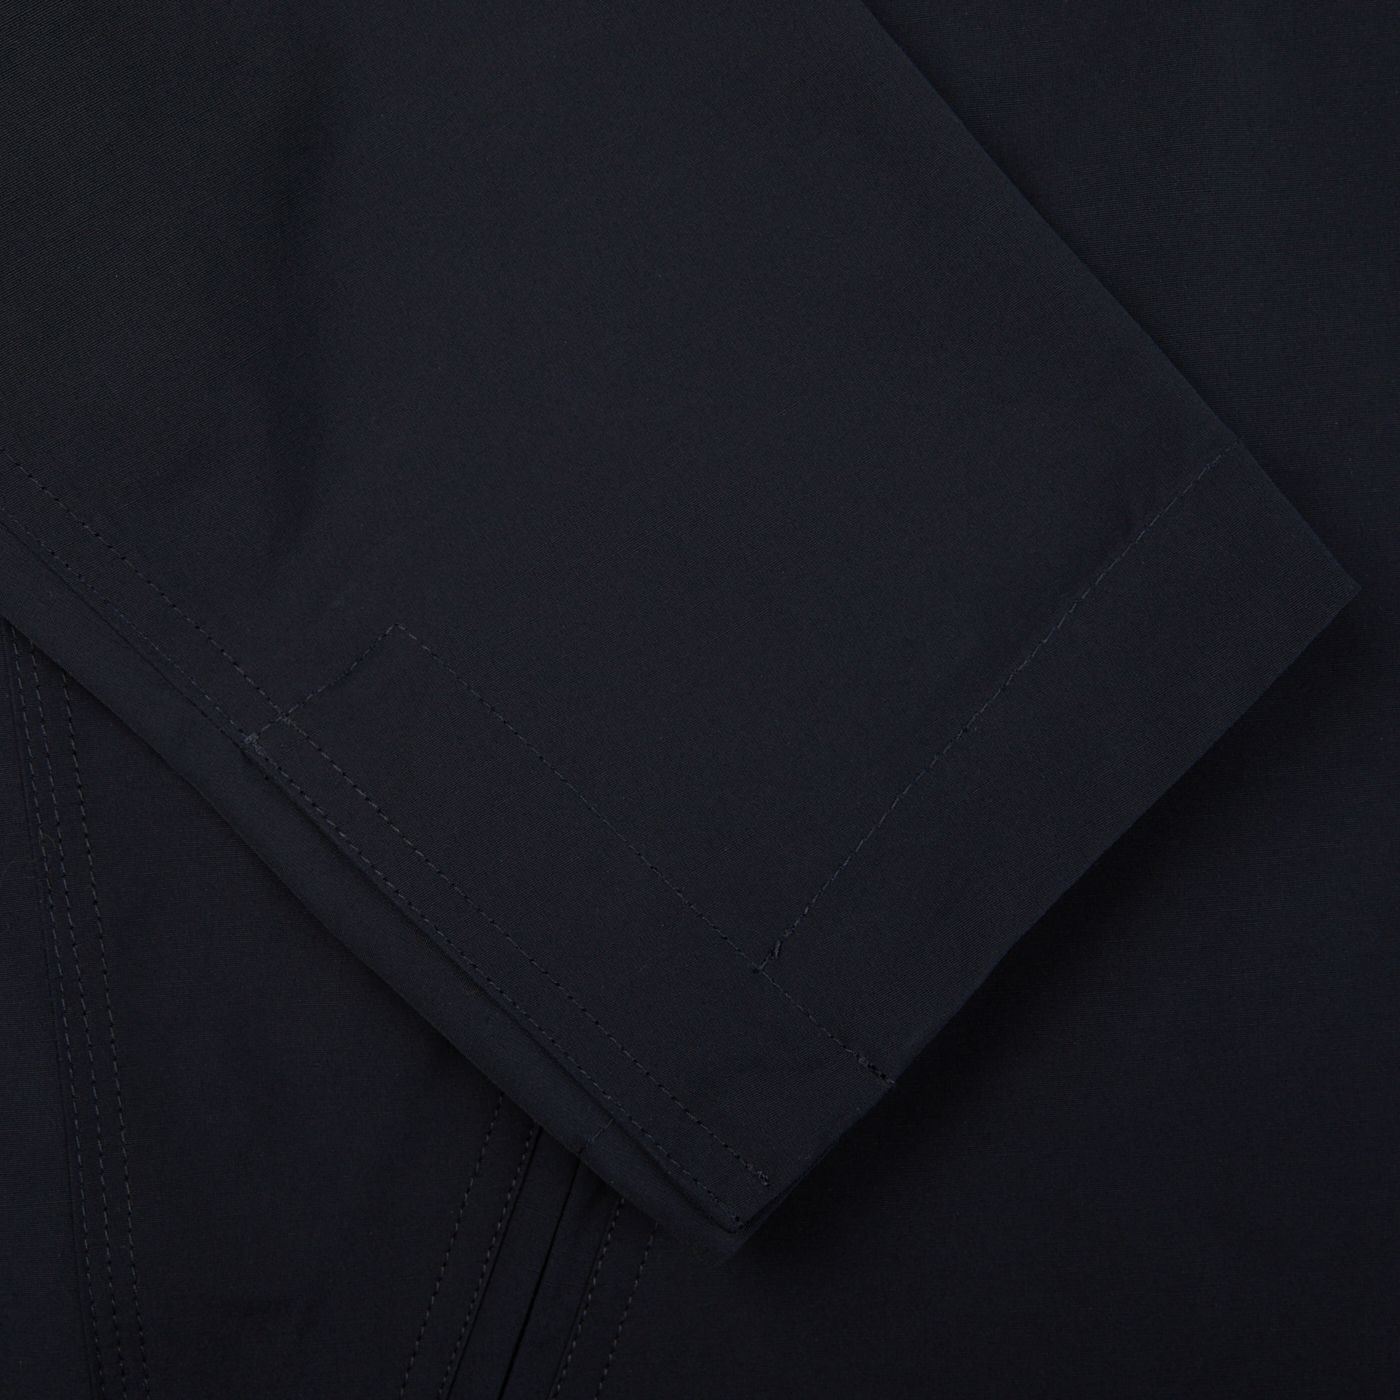 A close up of the pocket of a Navy Cotton Canvas Windbreaker Stringa Jacket by Aspesi.